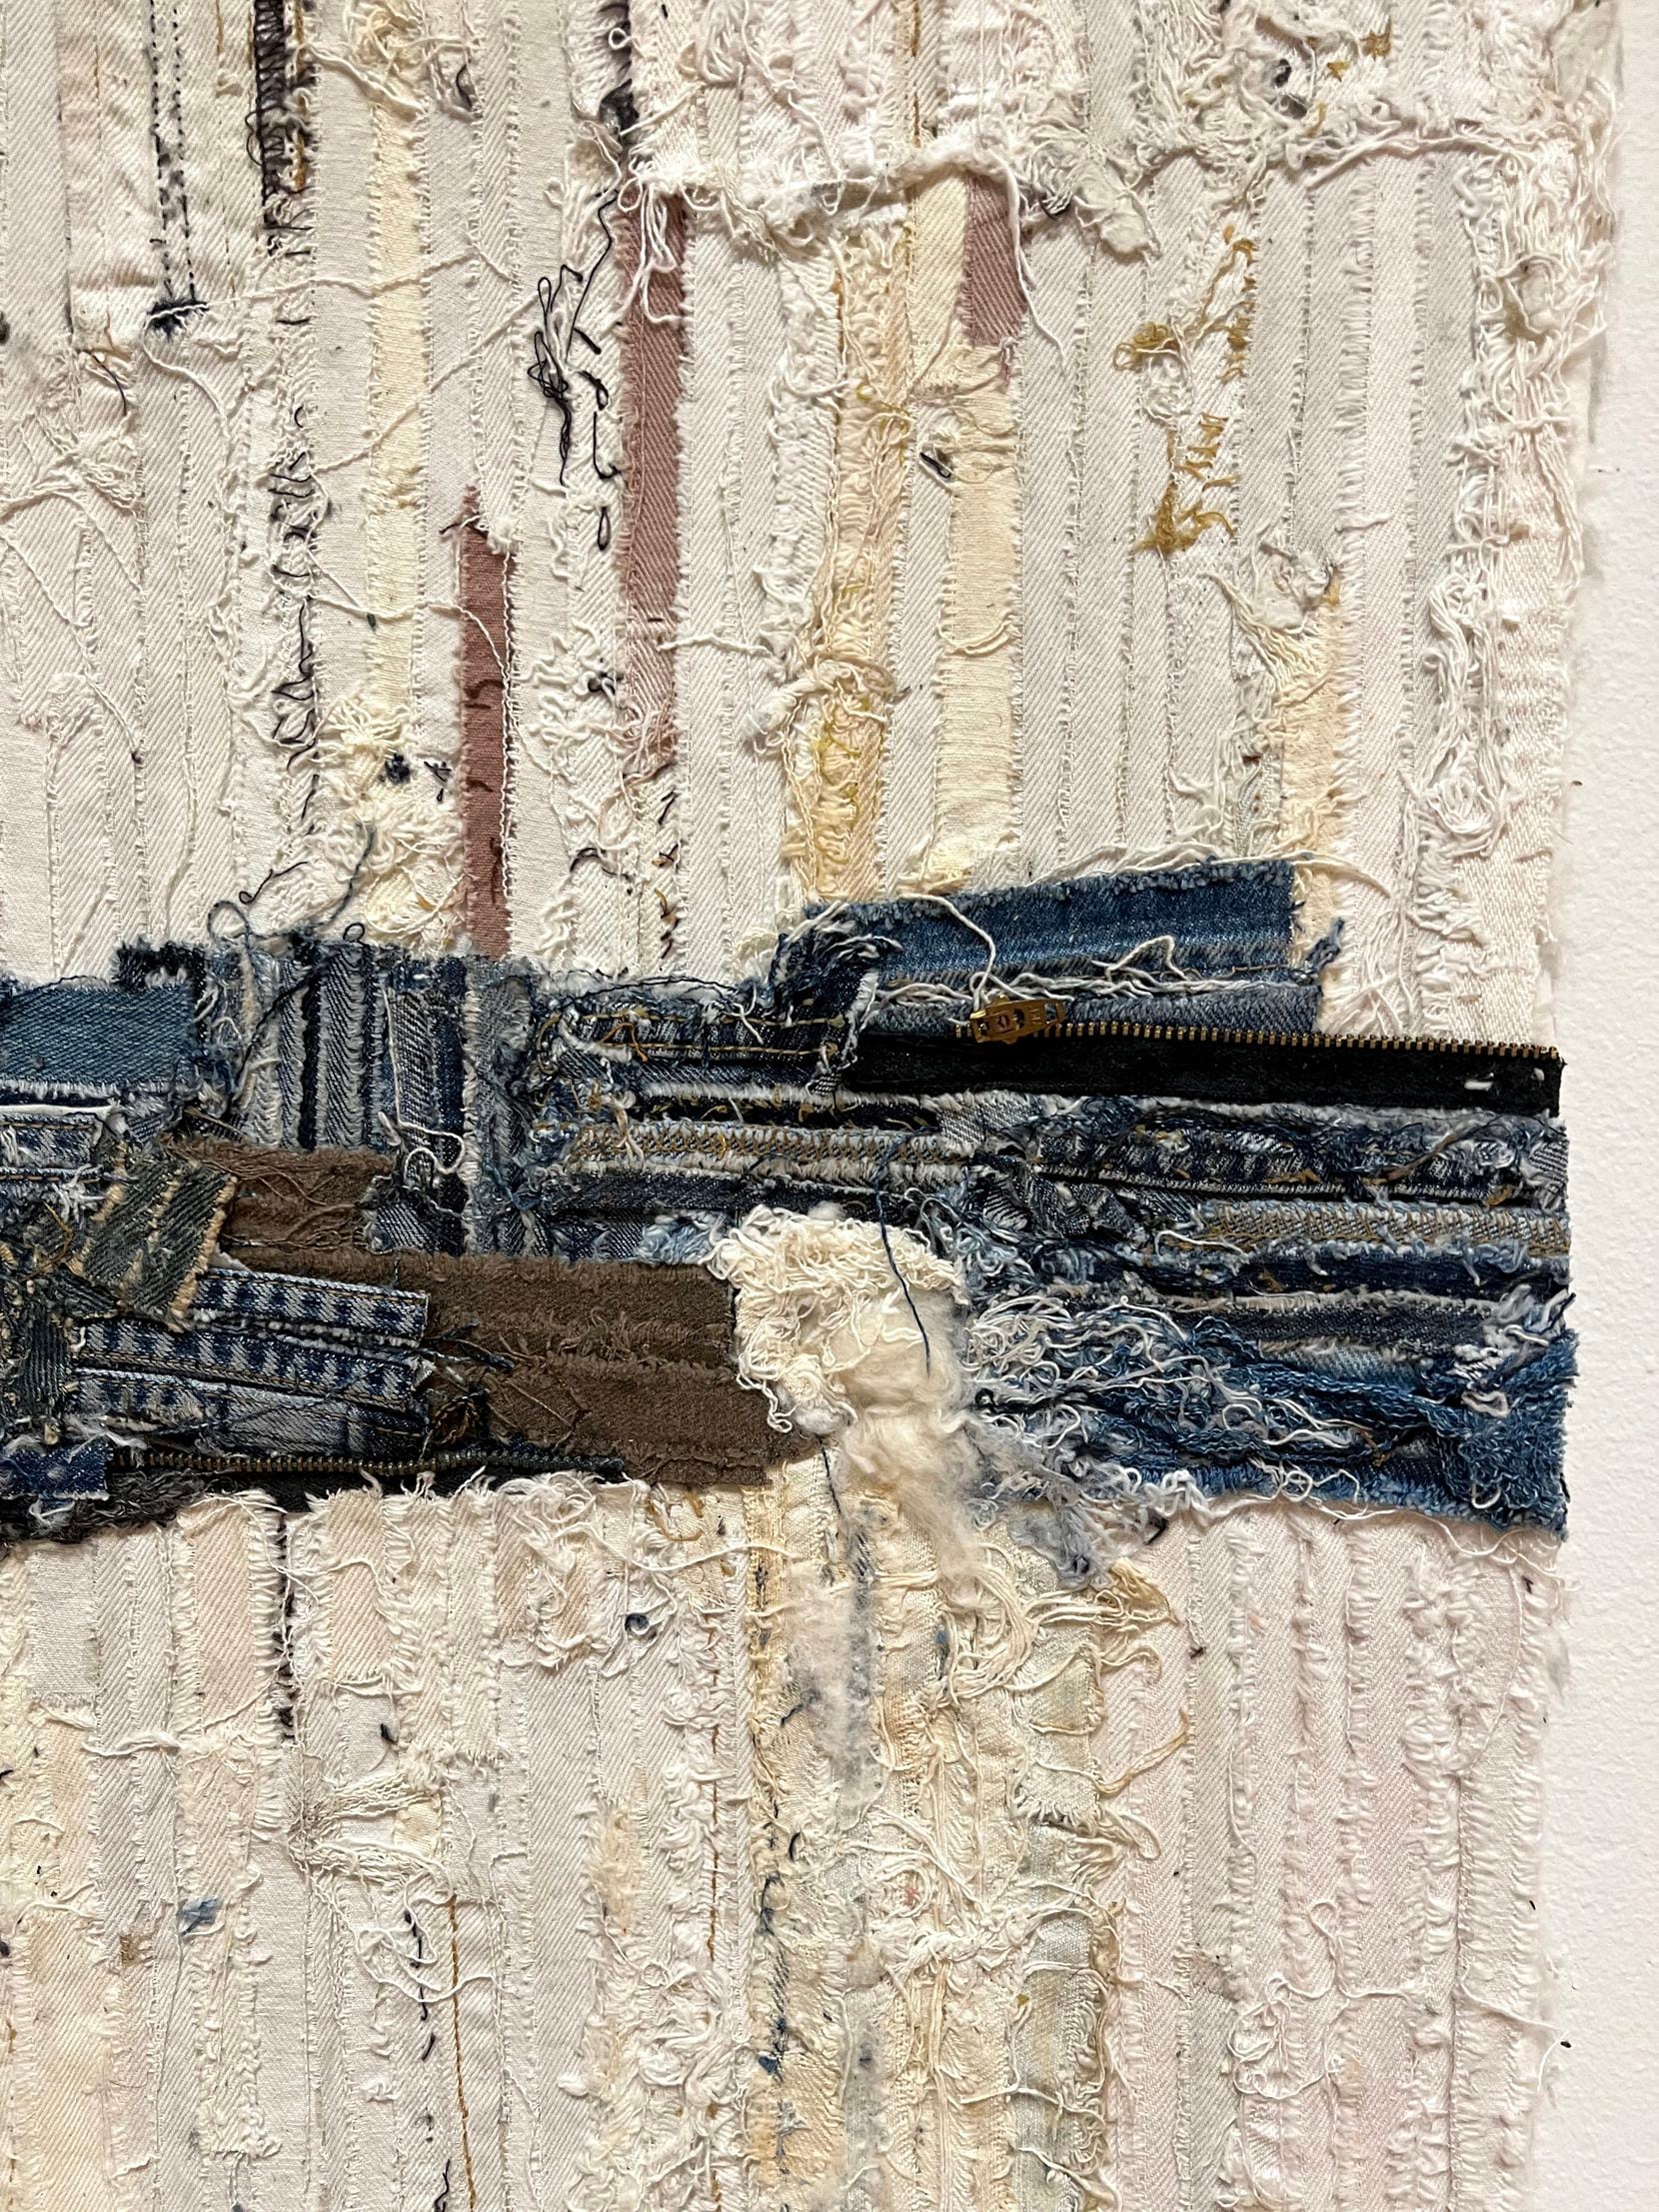 Jamal Cyrus' "Blue Alluvial Glue (Line)" features strips of shredded denim glued together in...